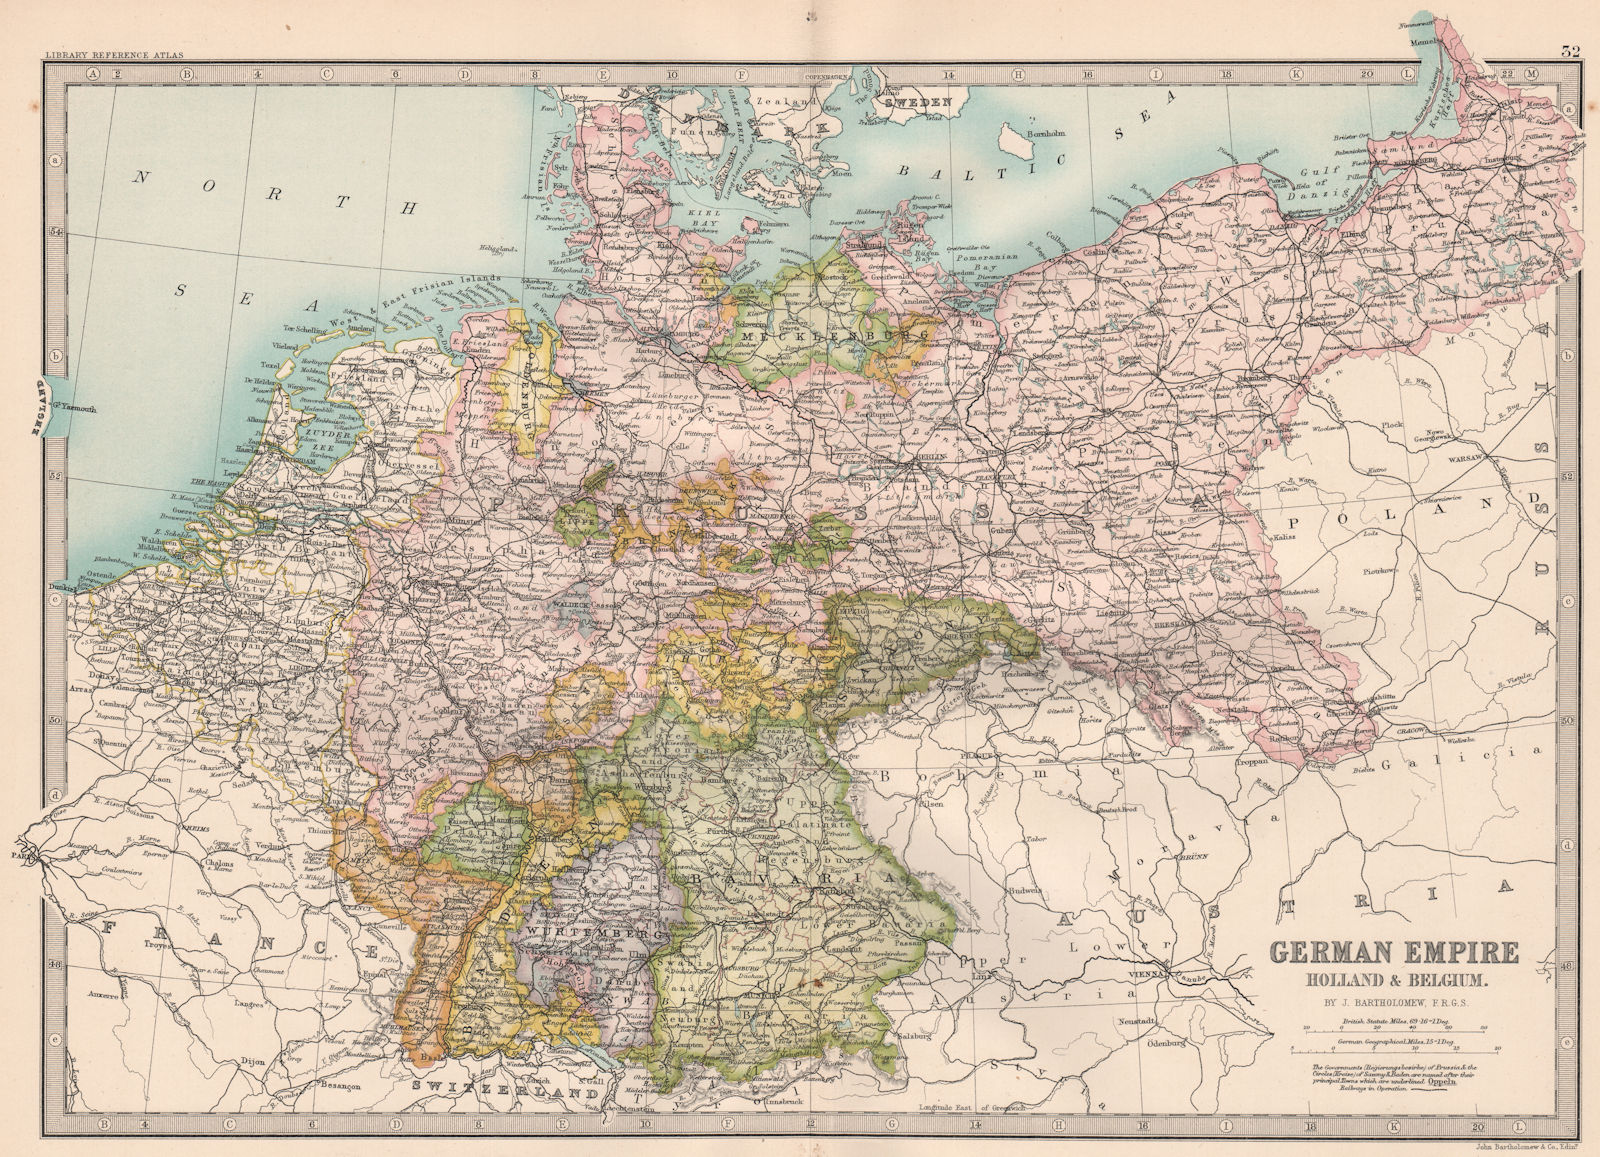 Associate Product EUROPE. German Empire Holland & Belgium. BARTHOLOMEW 1890 old antique map